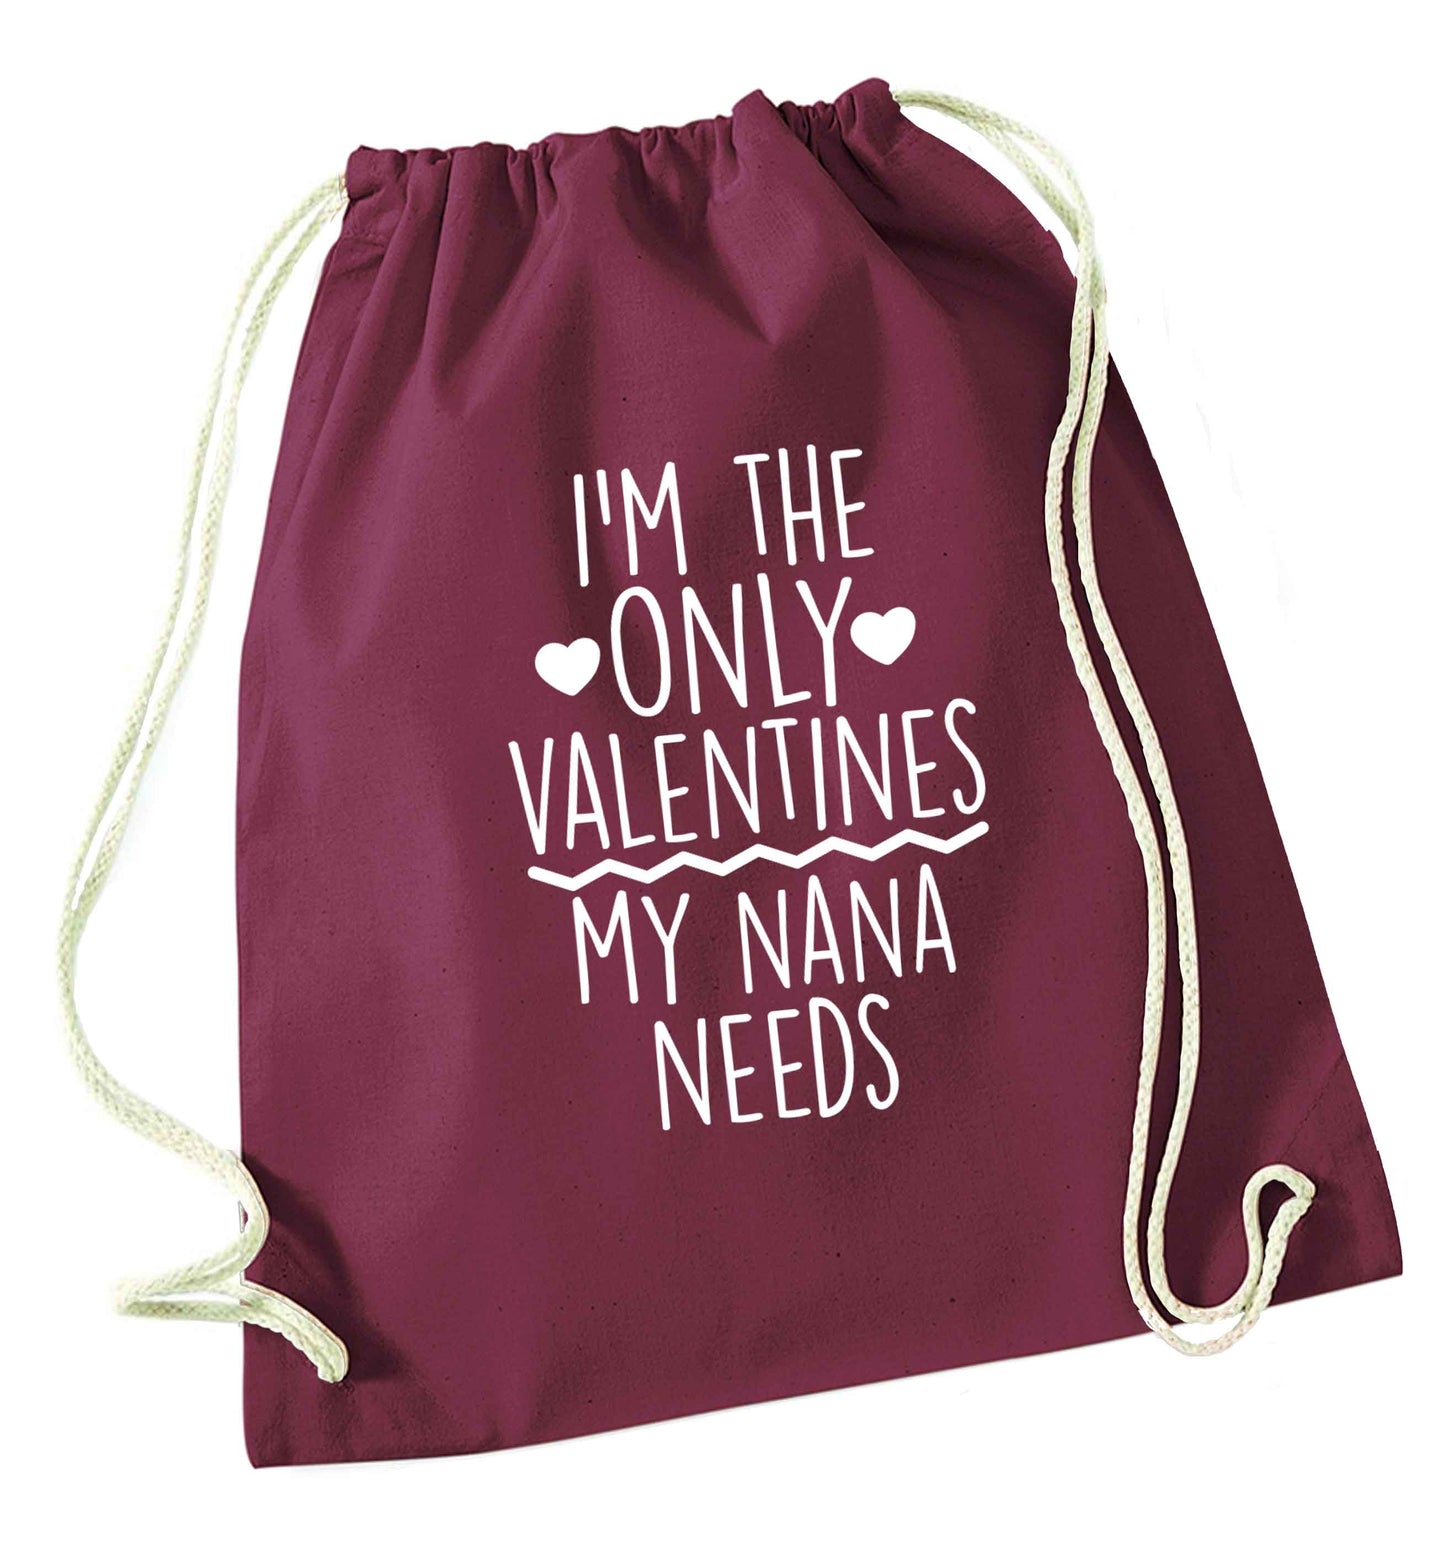 I'm the only valentines my nana needs maroon drawstring bag